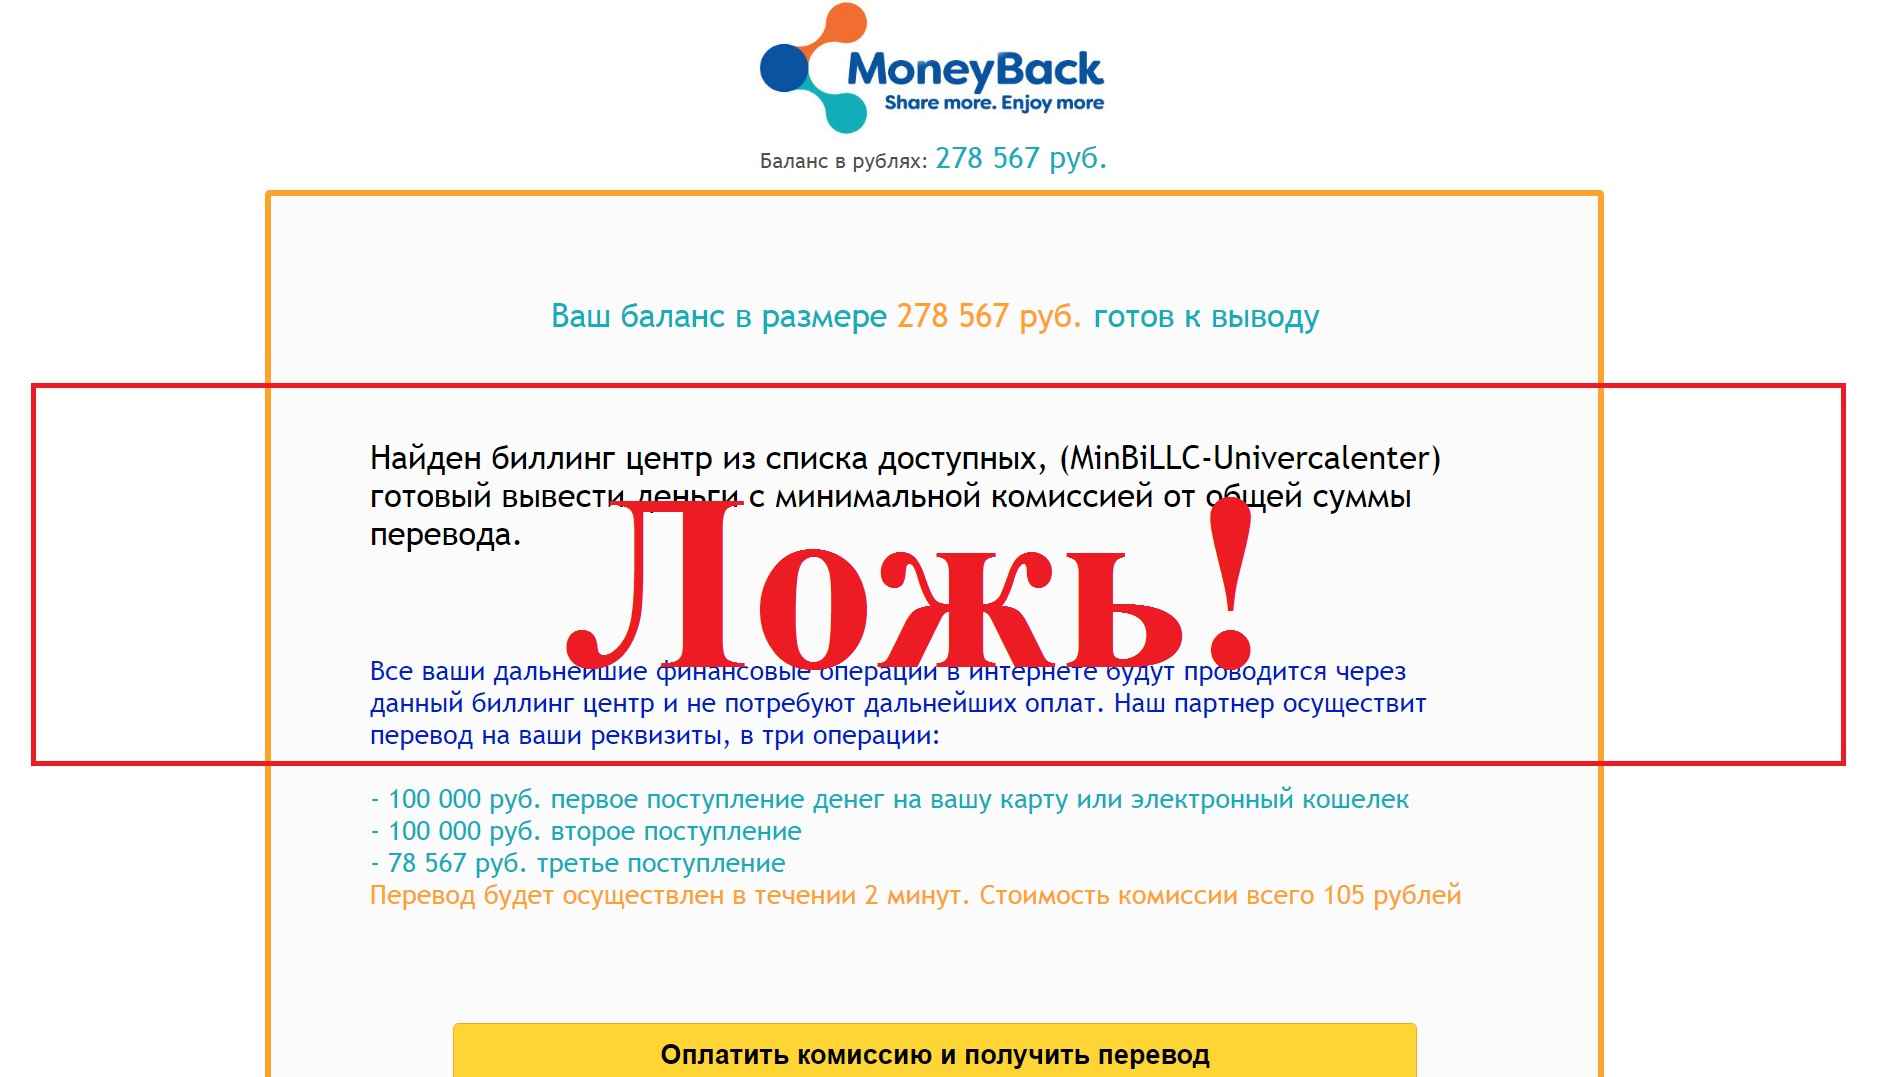 MoneyBack – отзывы о разводе